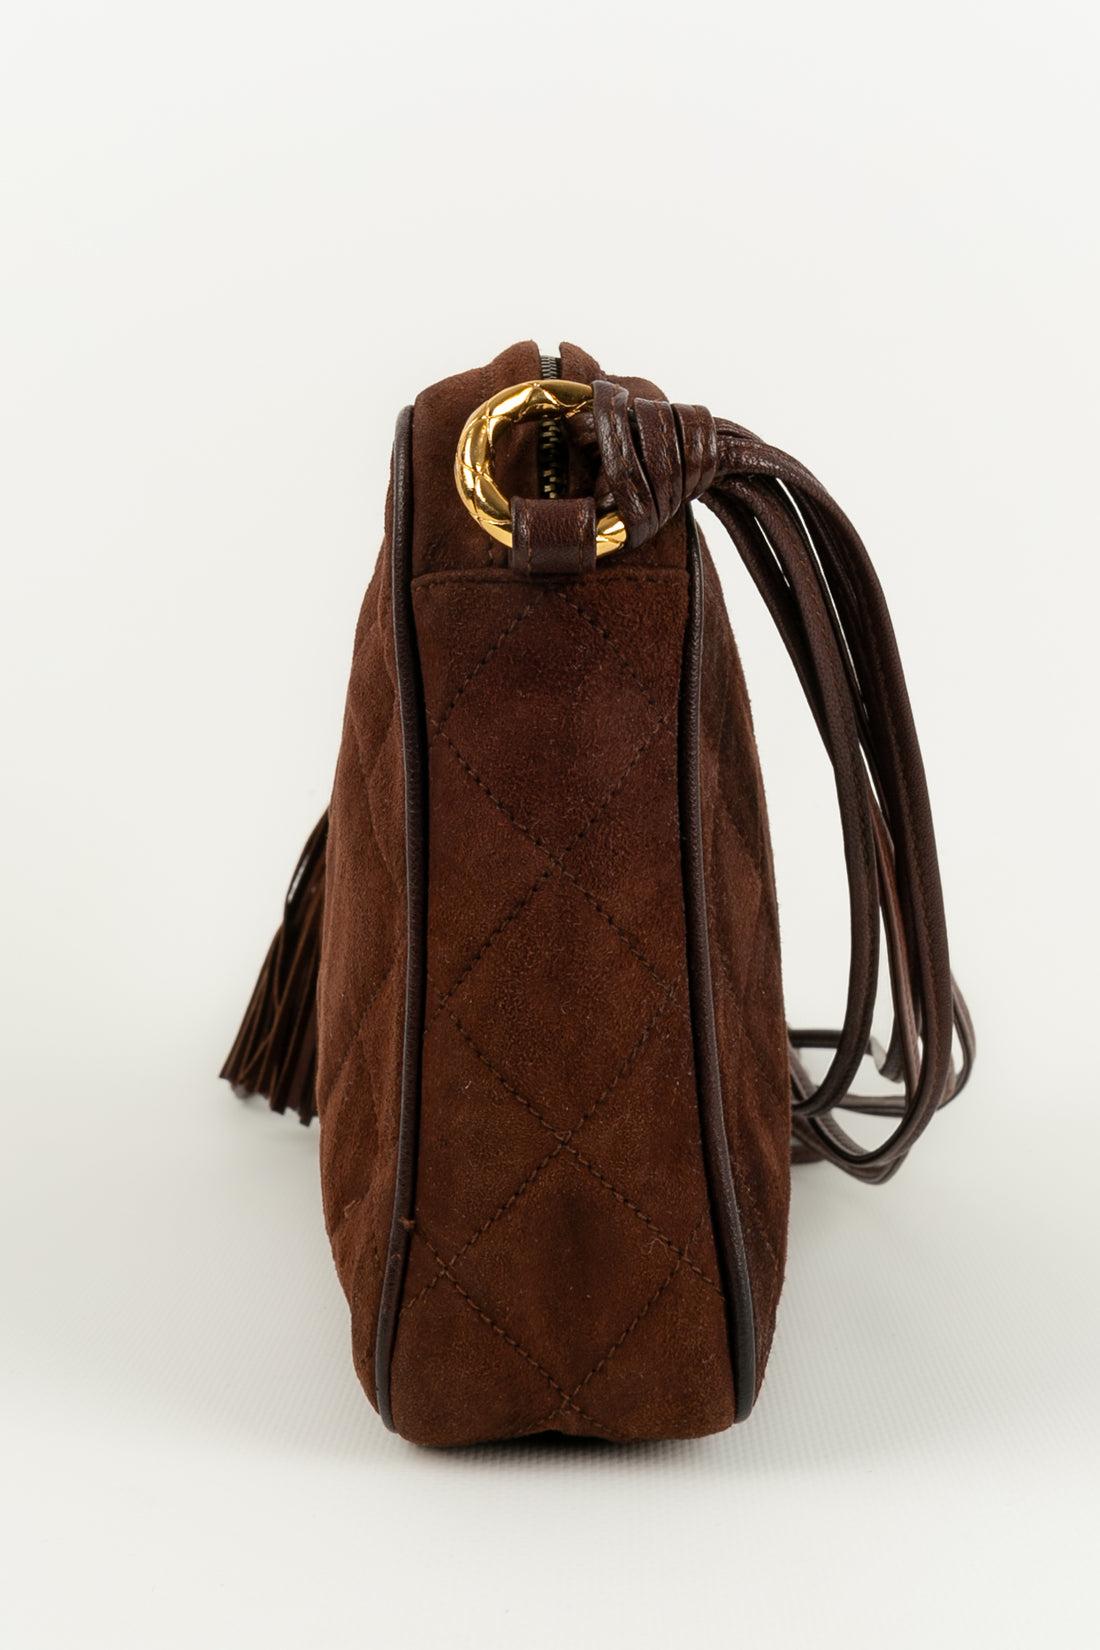 Women's Chanel Brown Suede Bag